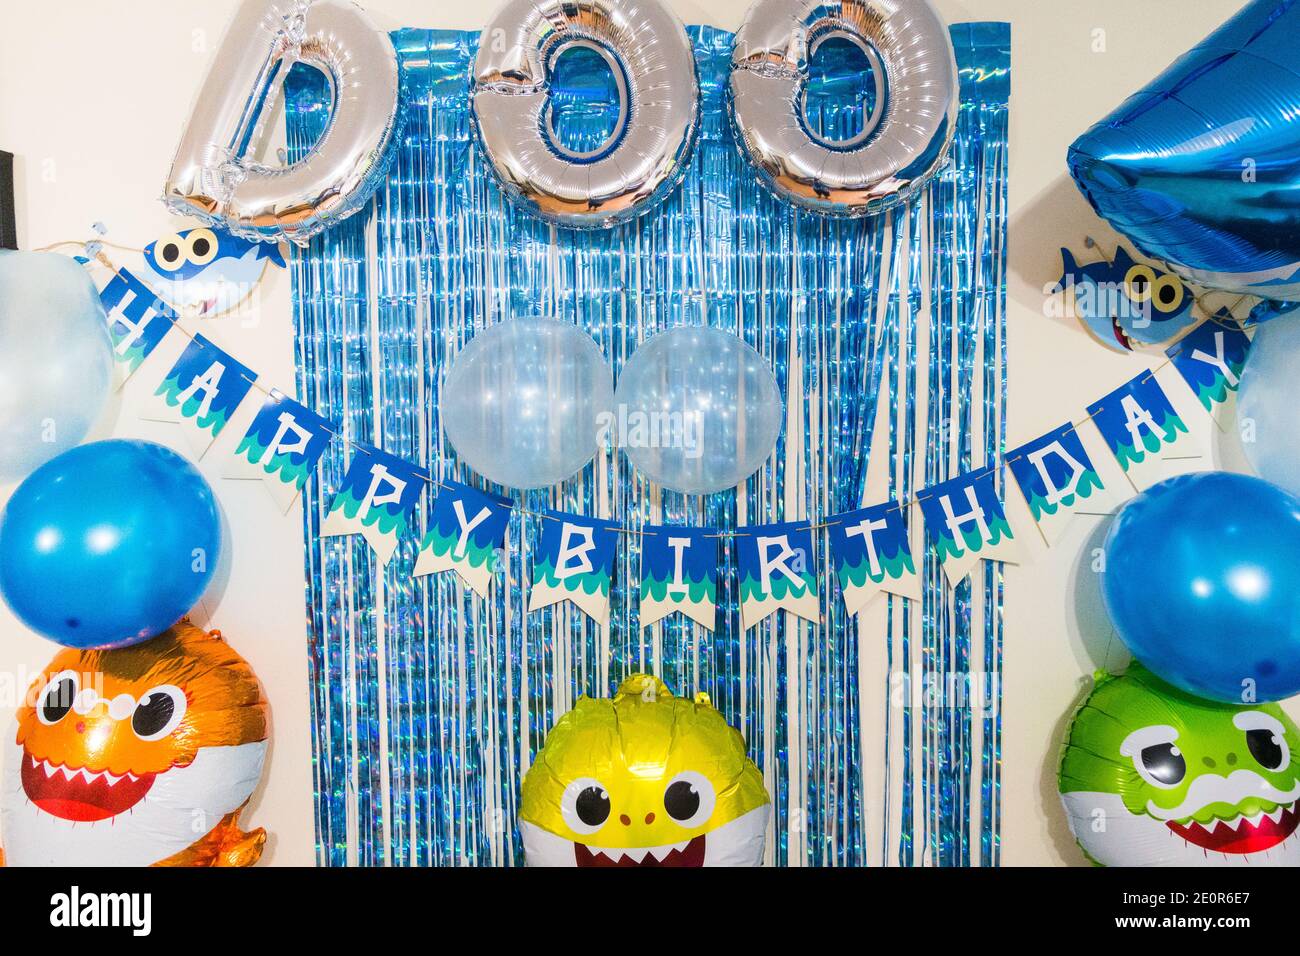 Baby Shark Birthday Party Decorations